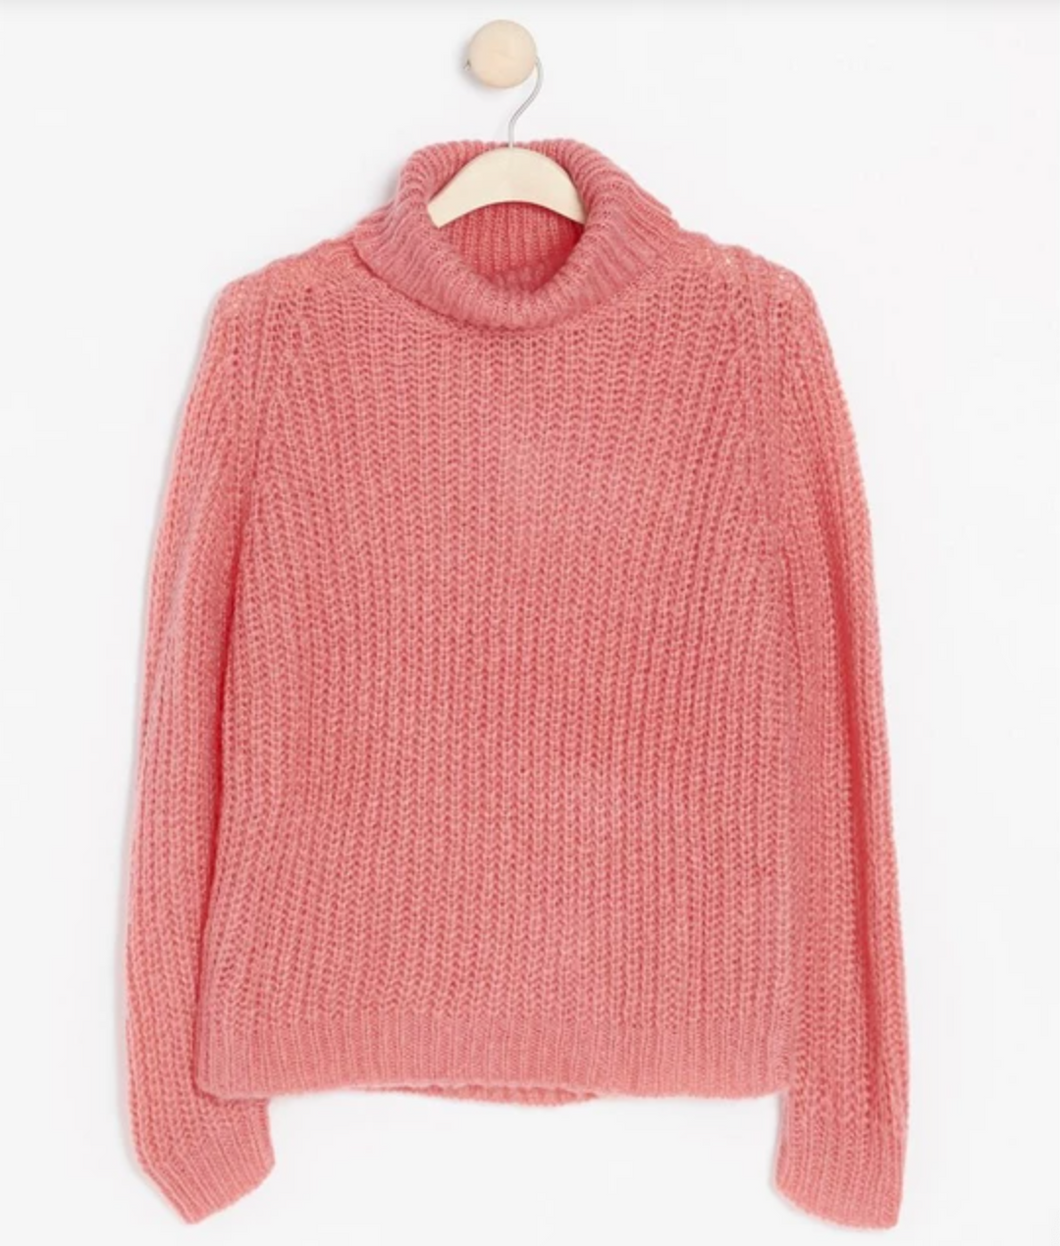 Soft Pink Roll Neck Knitwear Sweater